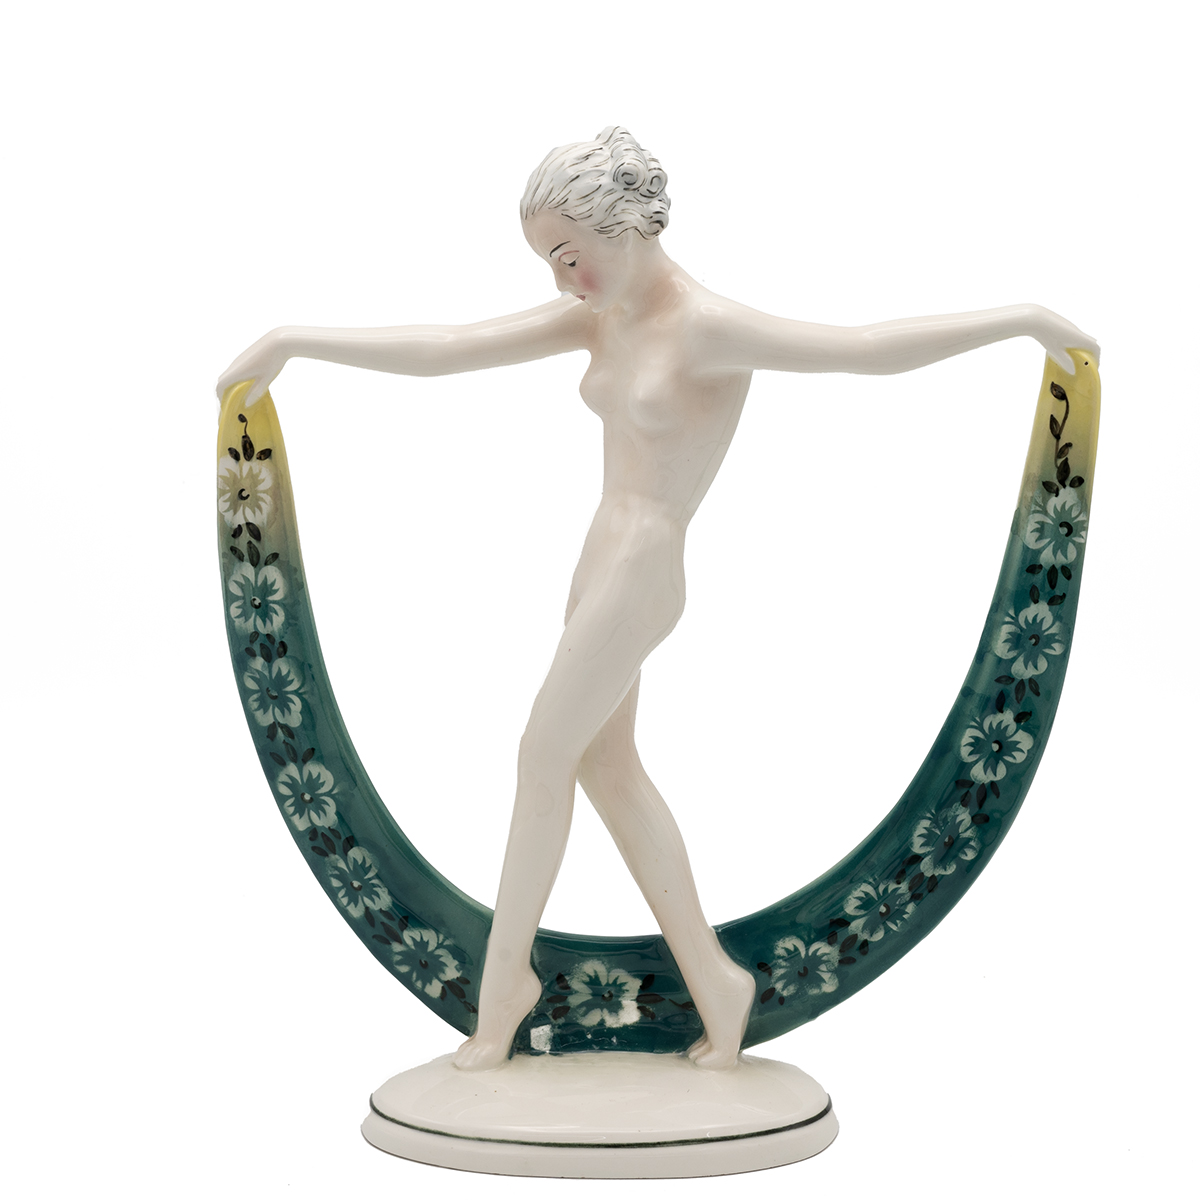 Katzhutte Hertwig & Co porcelain (Thuringia, Germany) - Dancing Woman en deshabille, circa 1930. ...